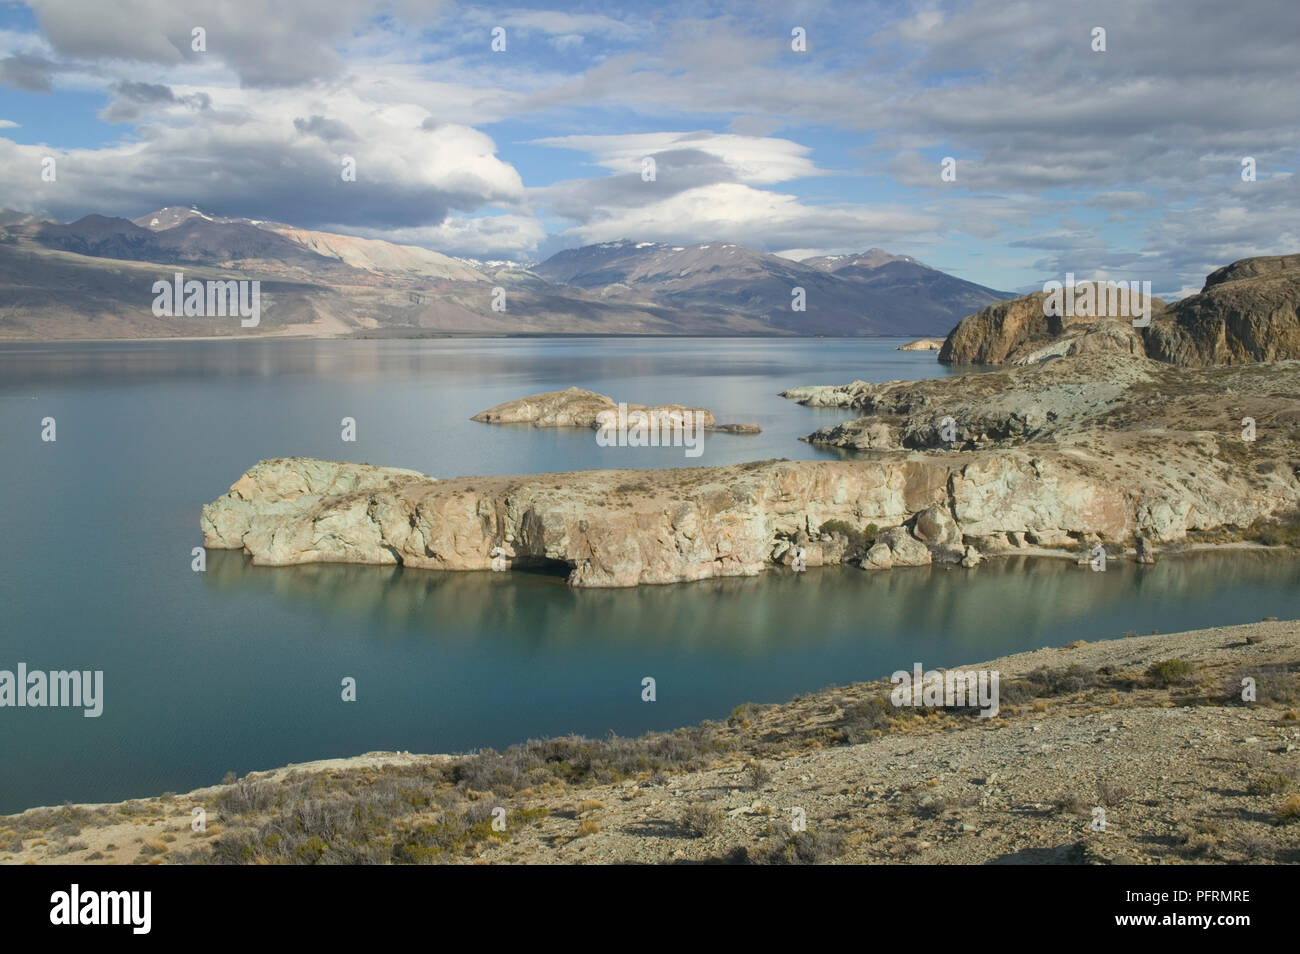 Argentina, Patagonia, Santa Cruz Province, Lago Posadas, lake surrounded by rocky shoreline Stock Photo